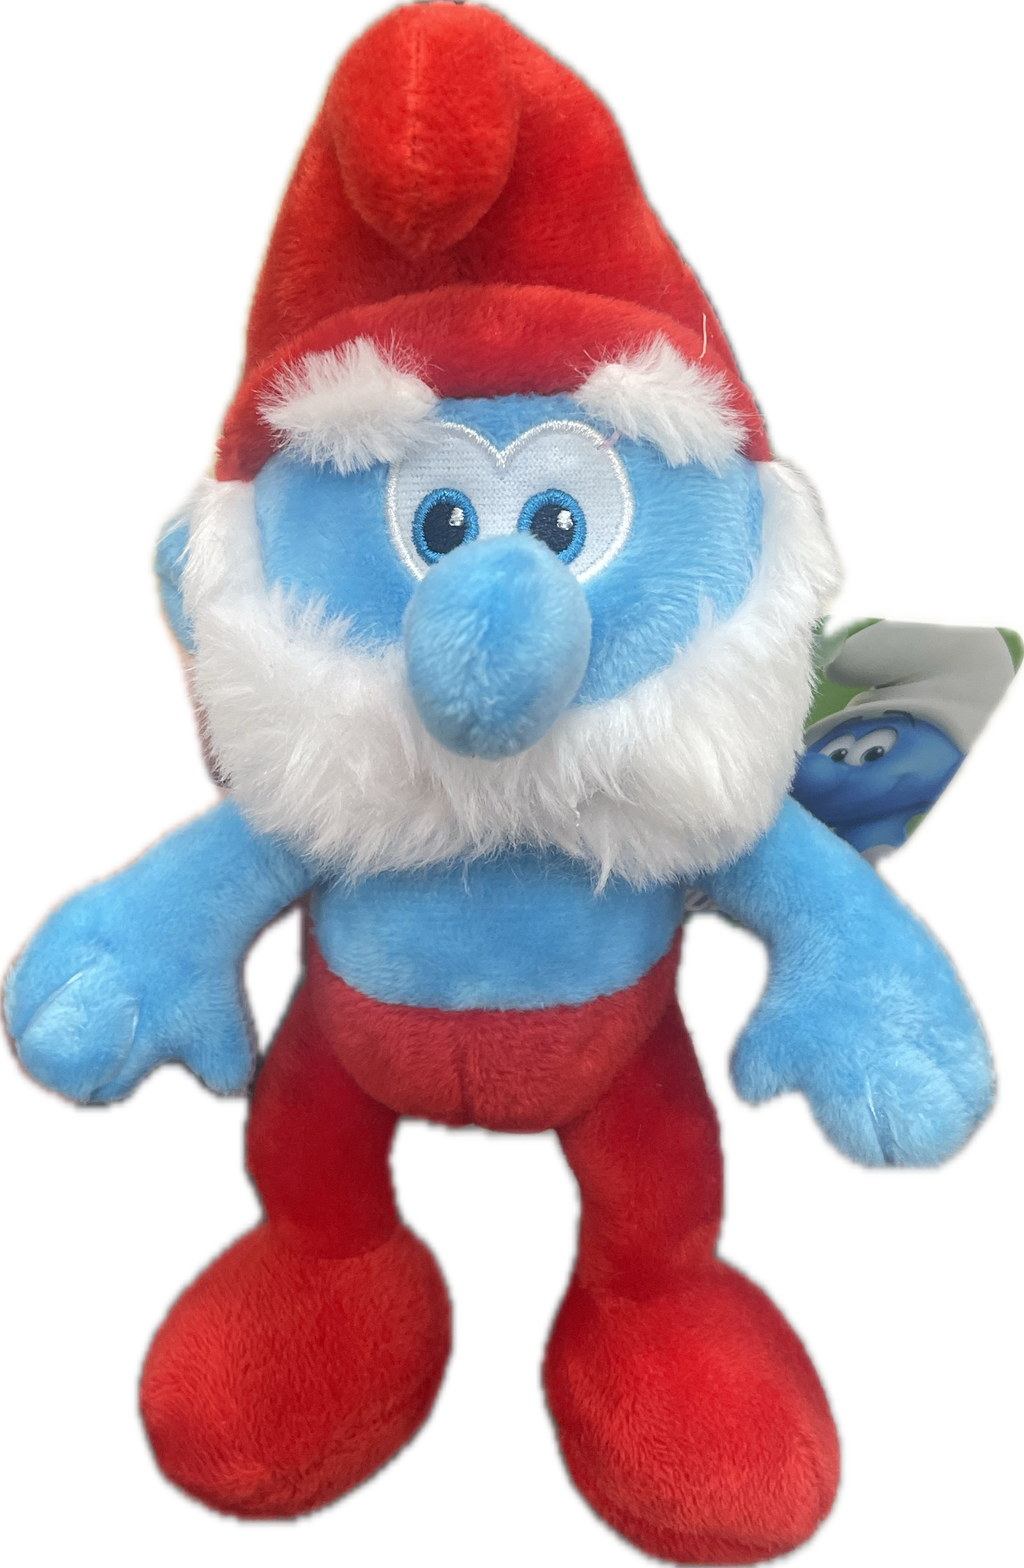 Papa Smurf - Plush Toy - 8 inch